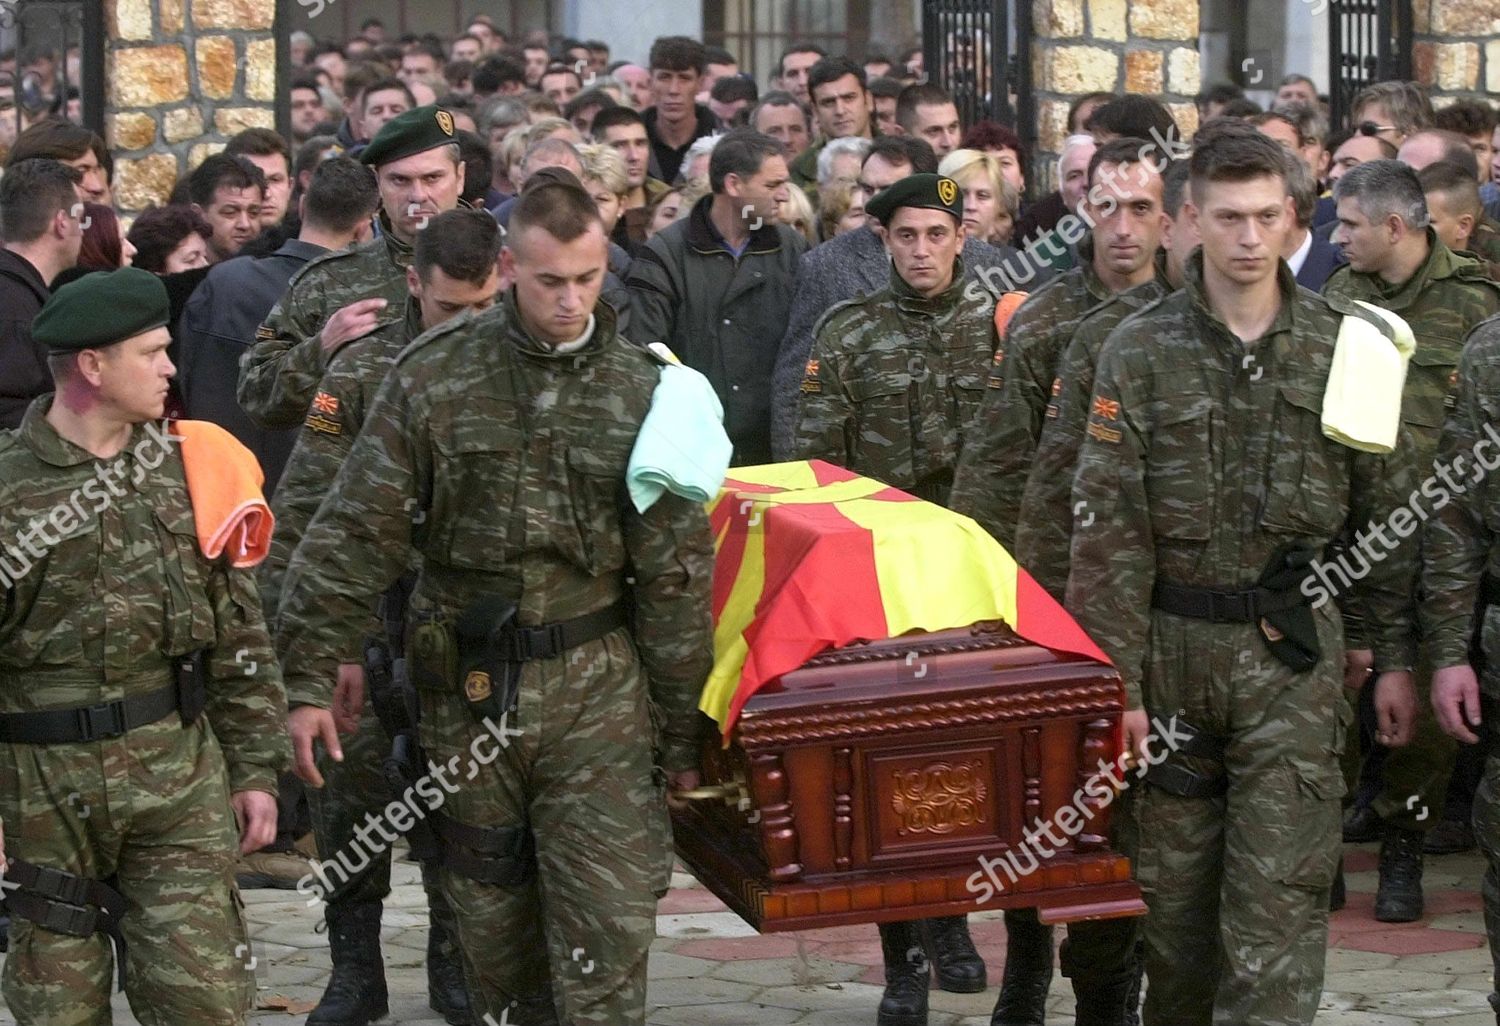 macedonia-funeral-nov-2001-shutterstock-editorial-8481840a.jpg